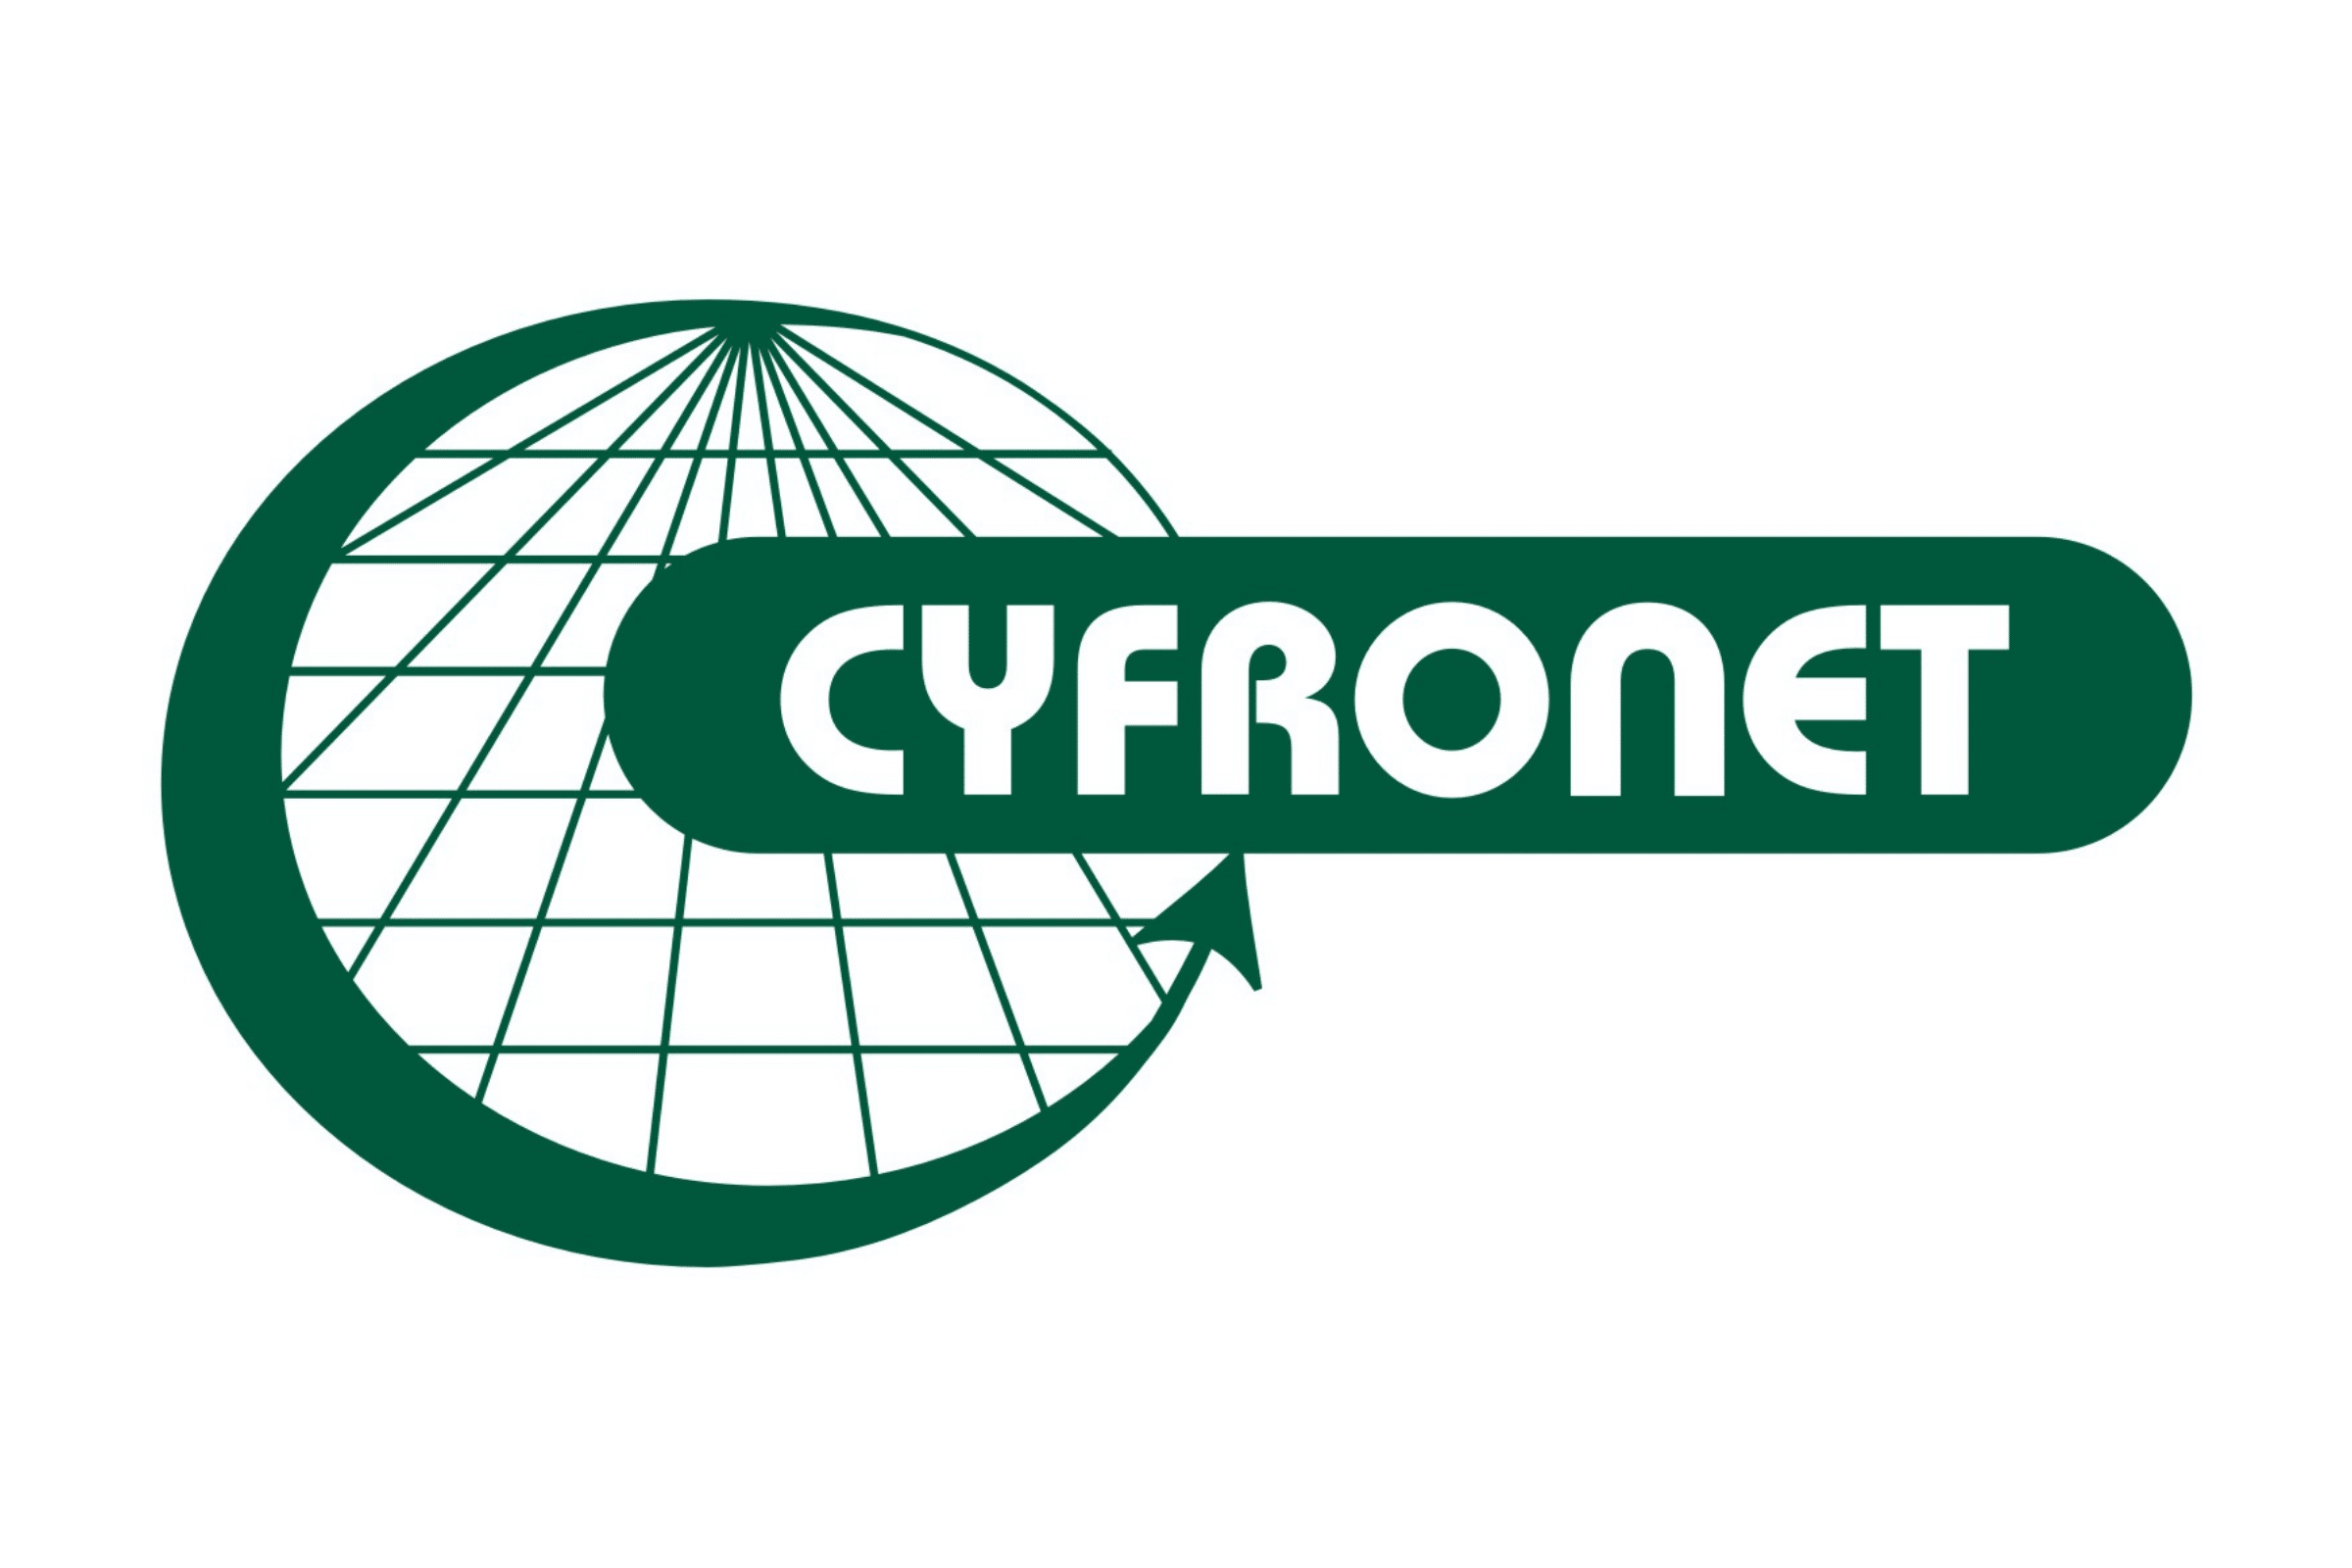 CYFRONET logo